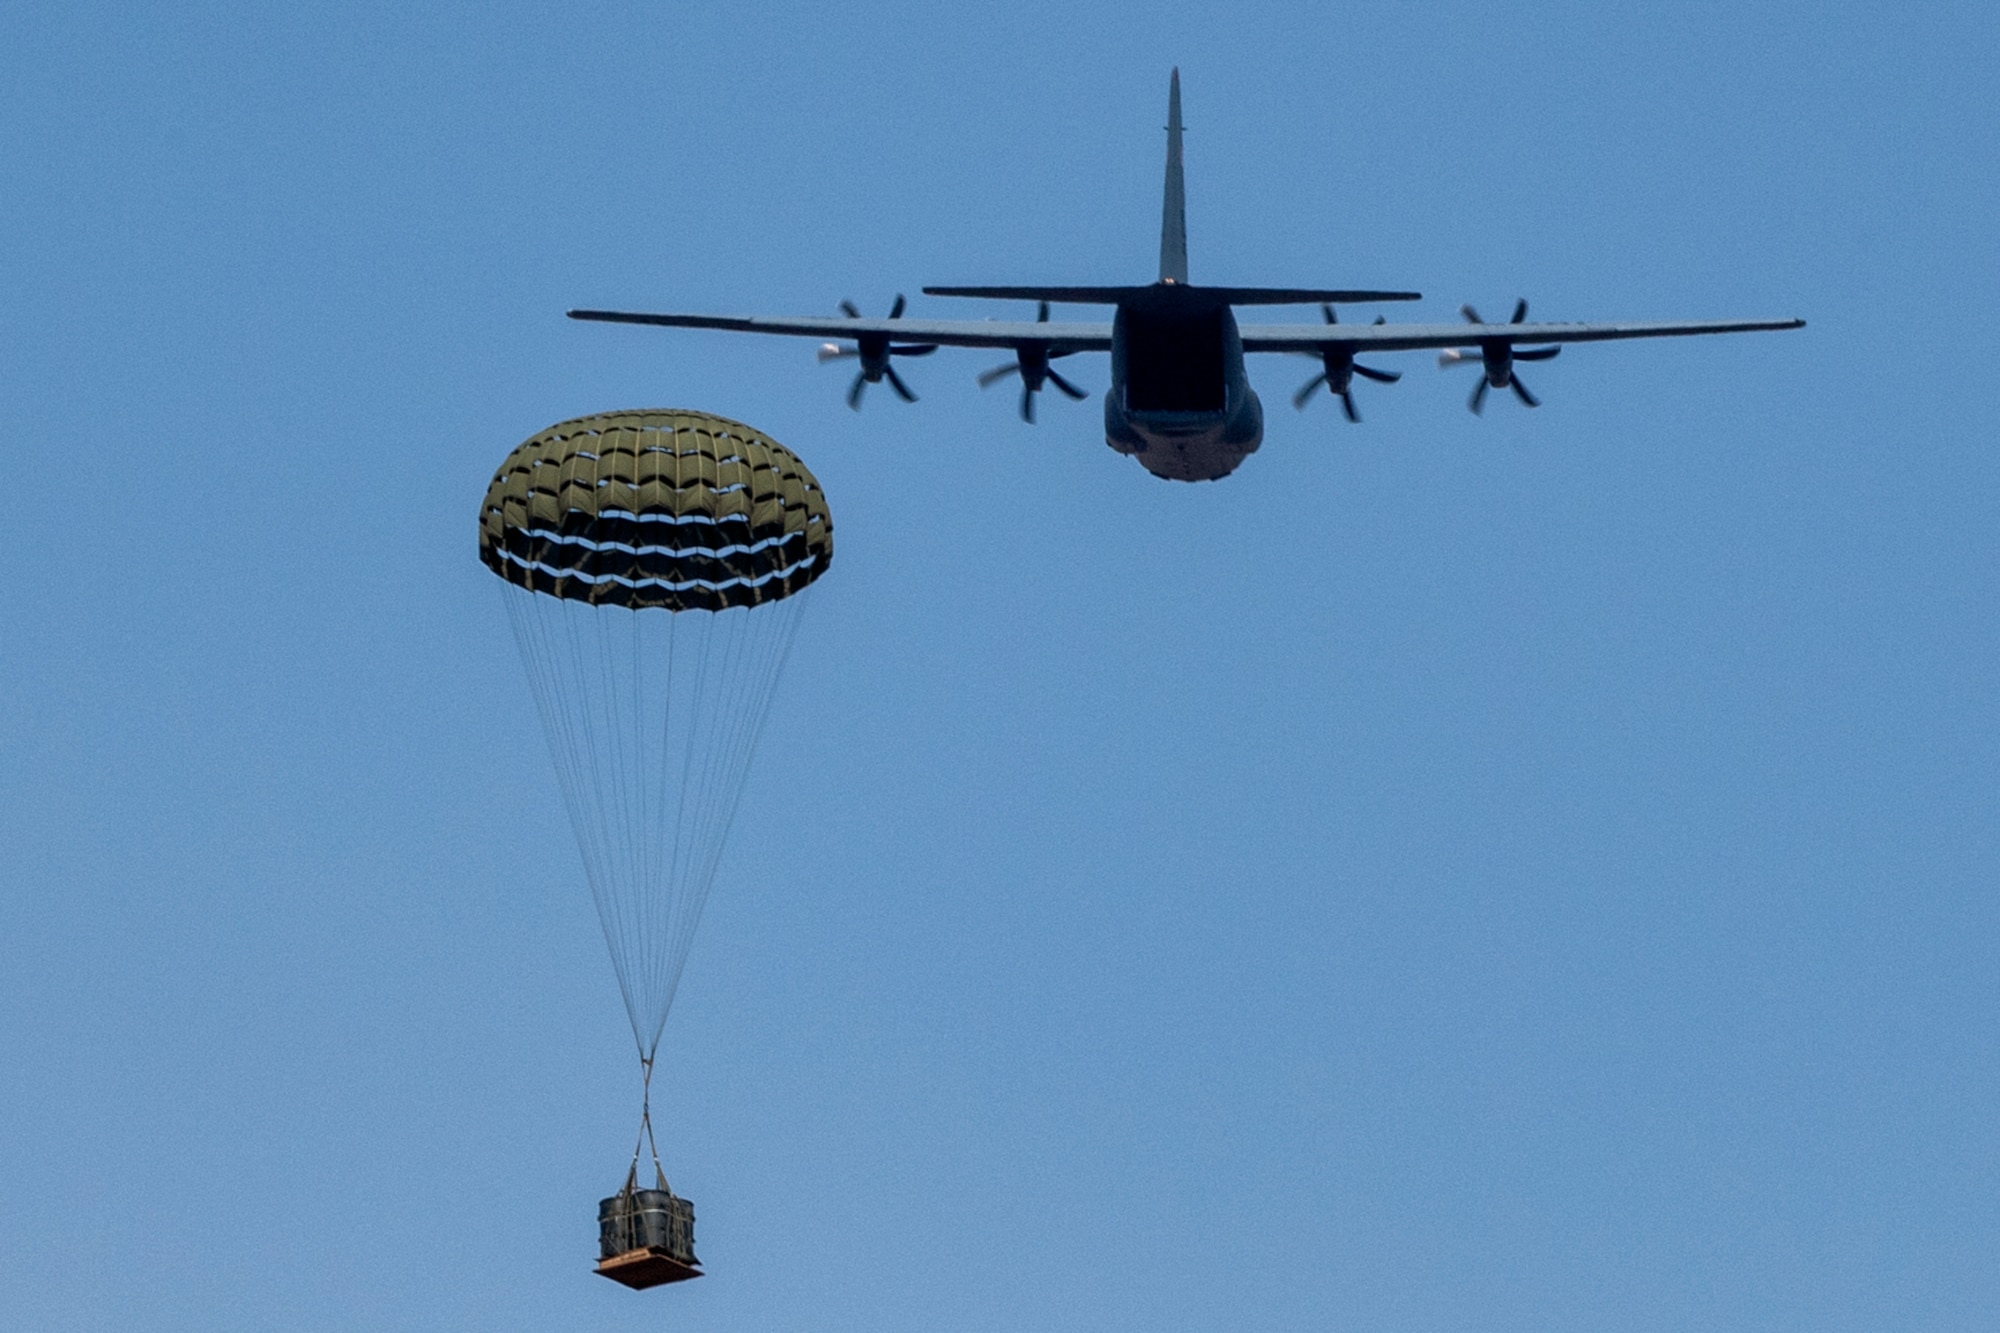 A parachute opens as a bundle floats toward the ground